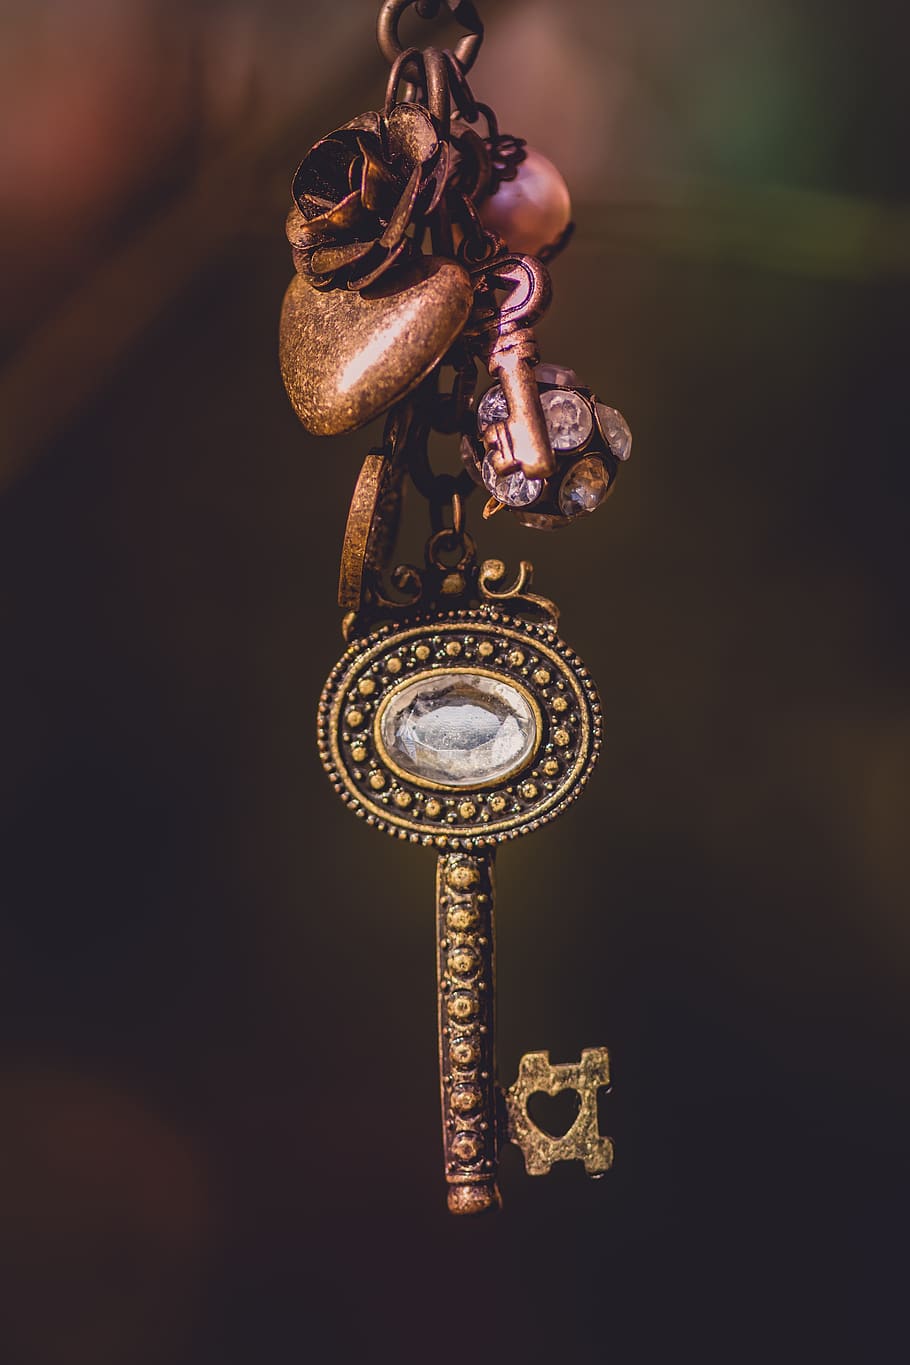 key, chain, art, design, dark, antique, clock, close-up, focus on foreground, old